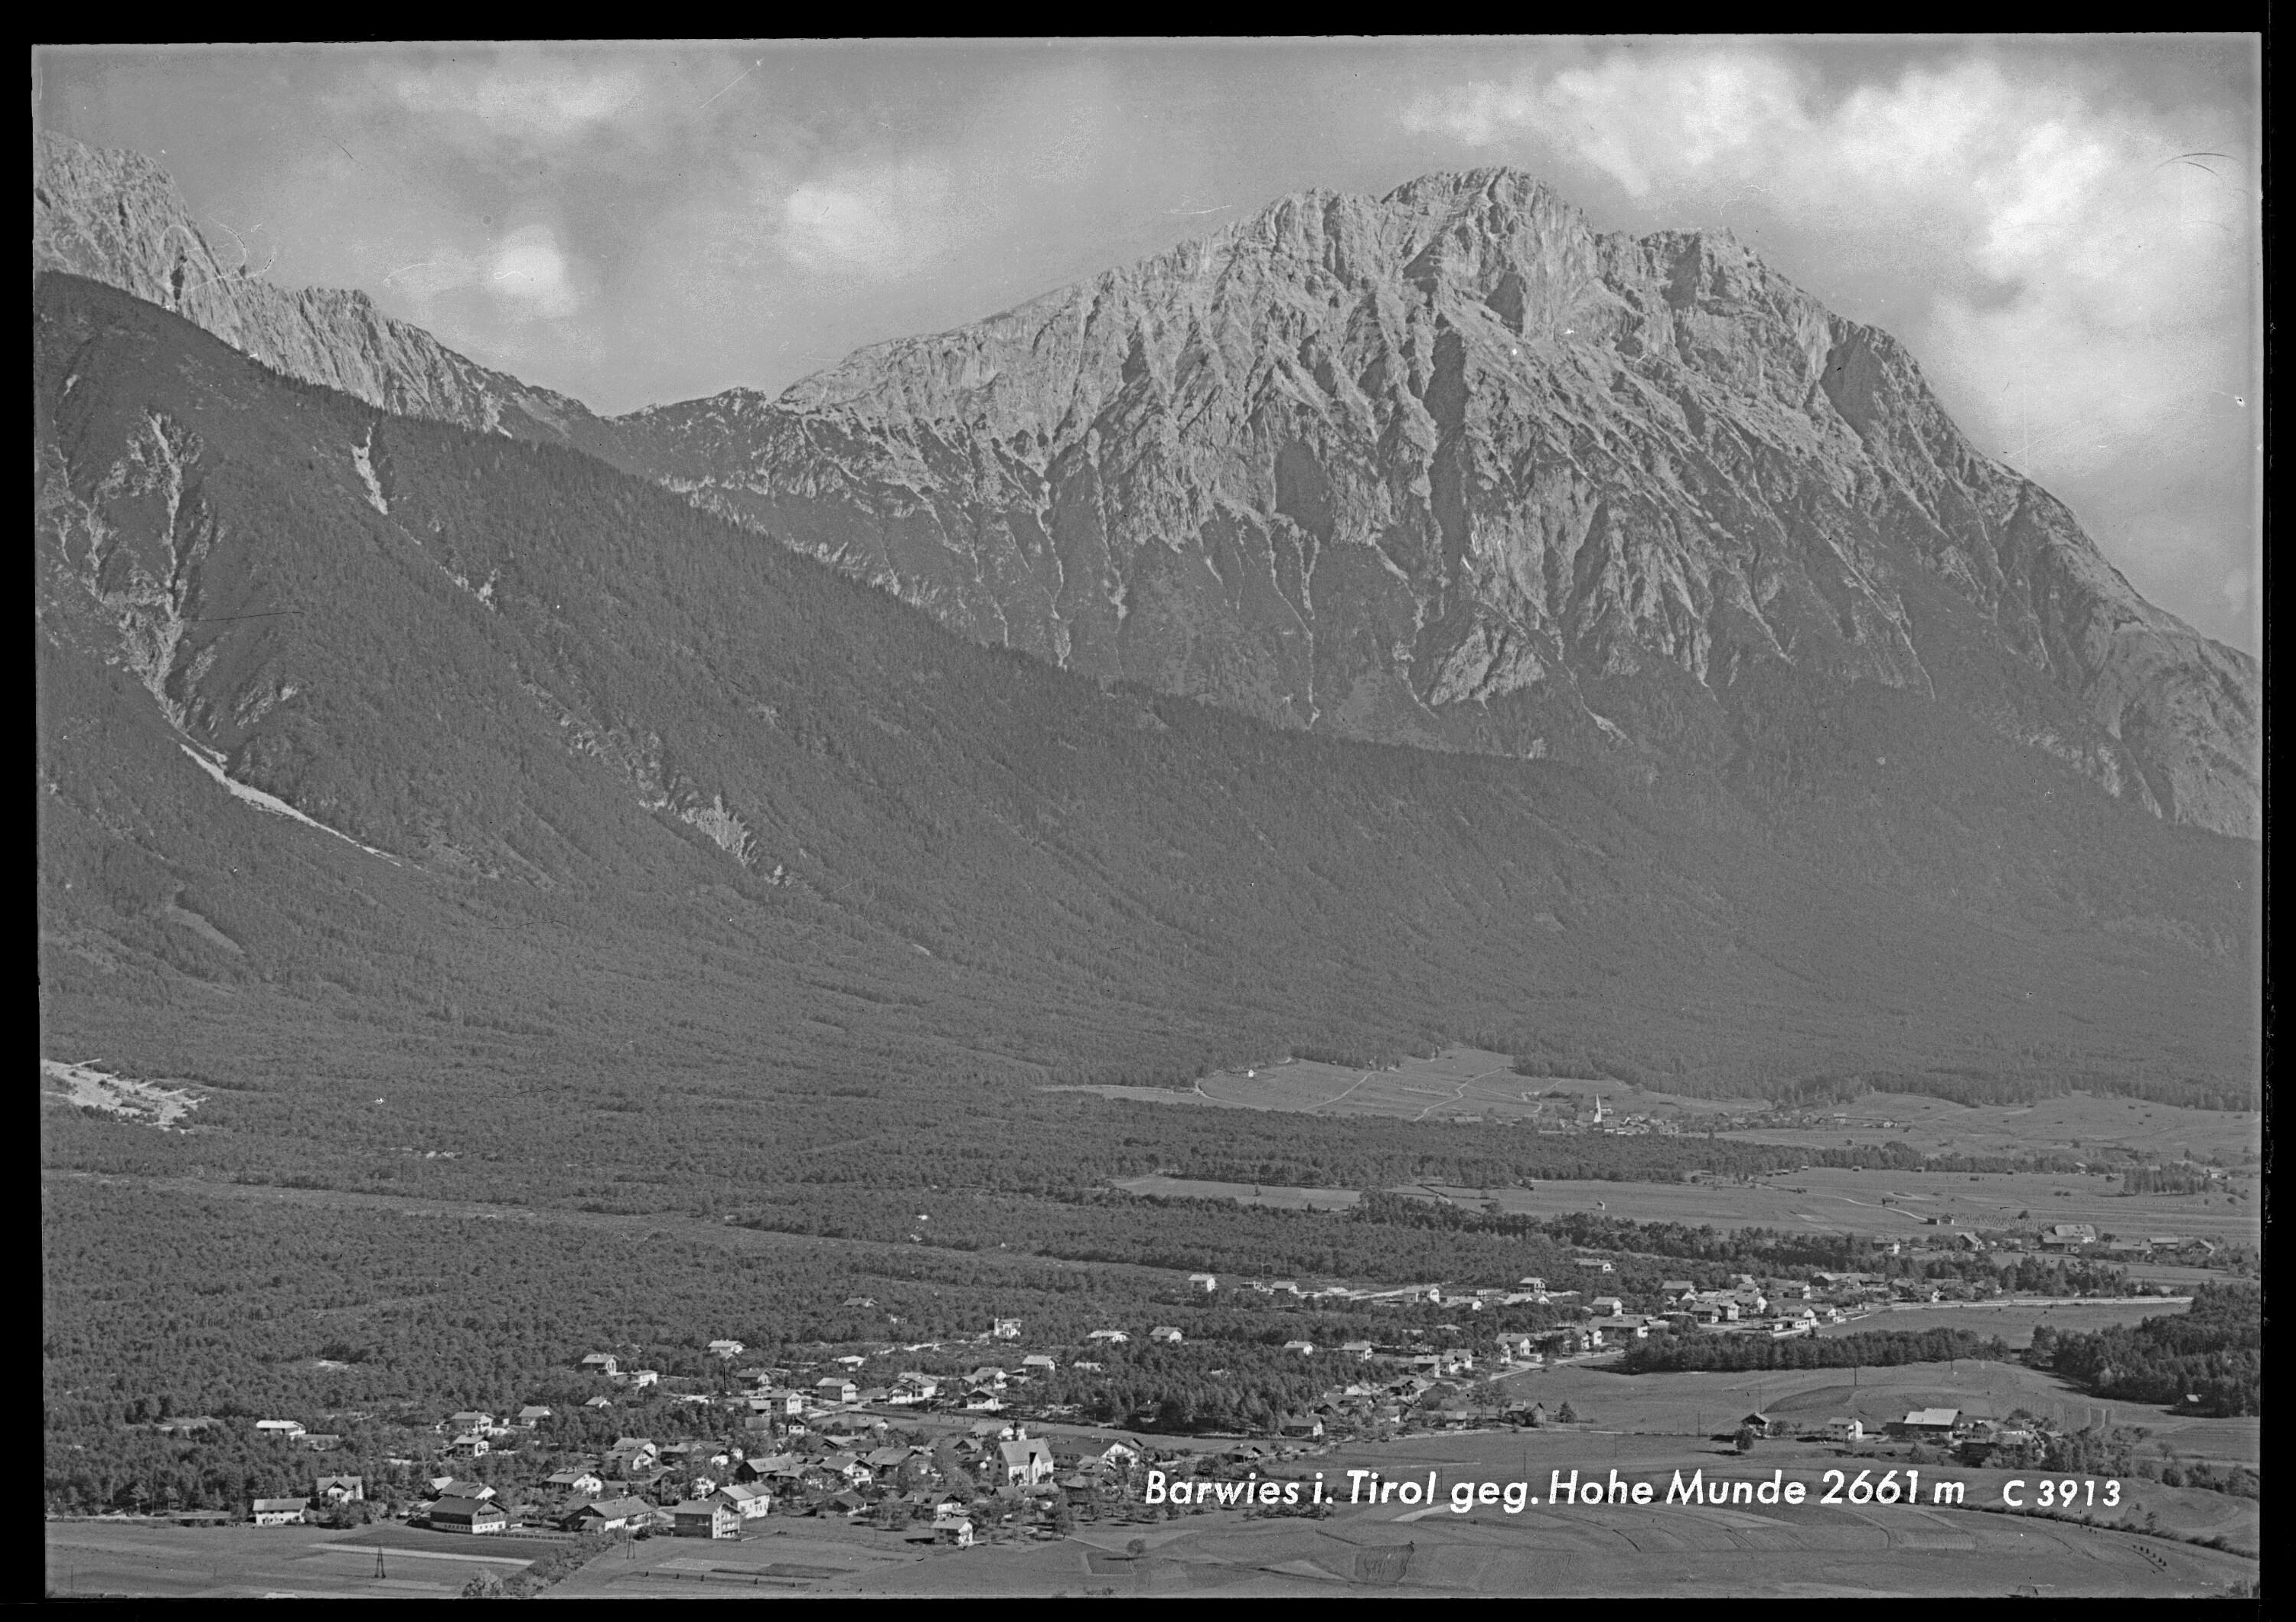 Barwies in Tirol gegen Hohe Munde 2661 m></div>


    <hr>
    <div class=